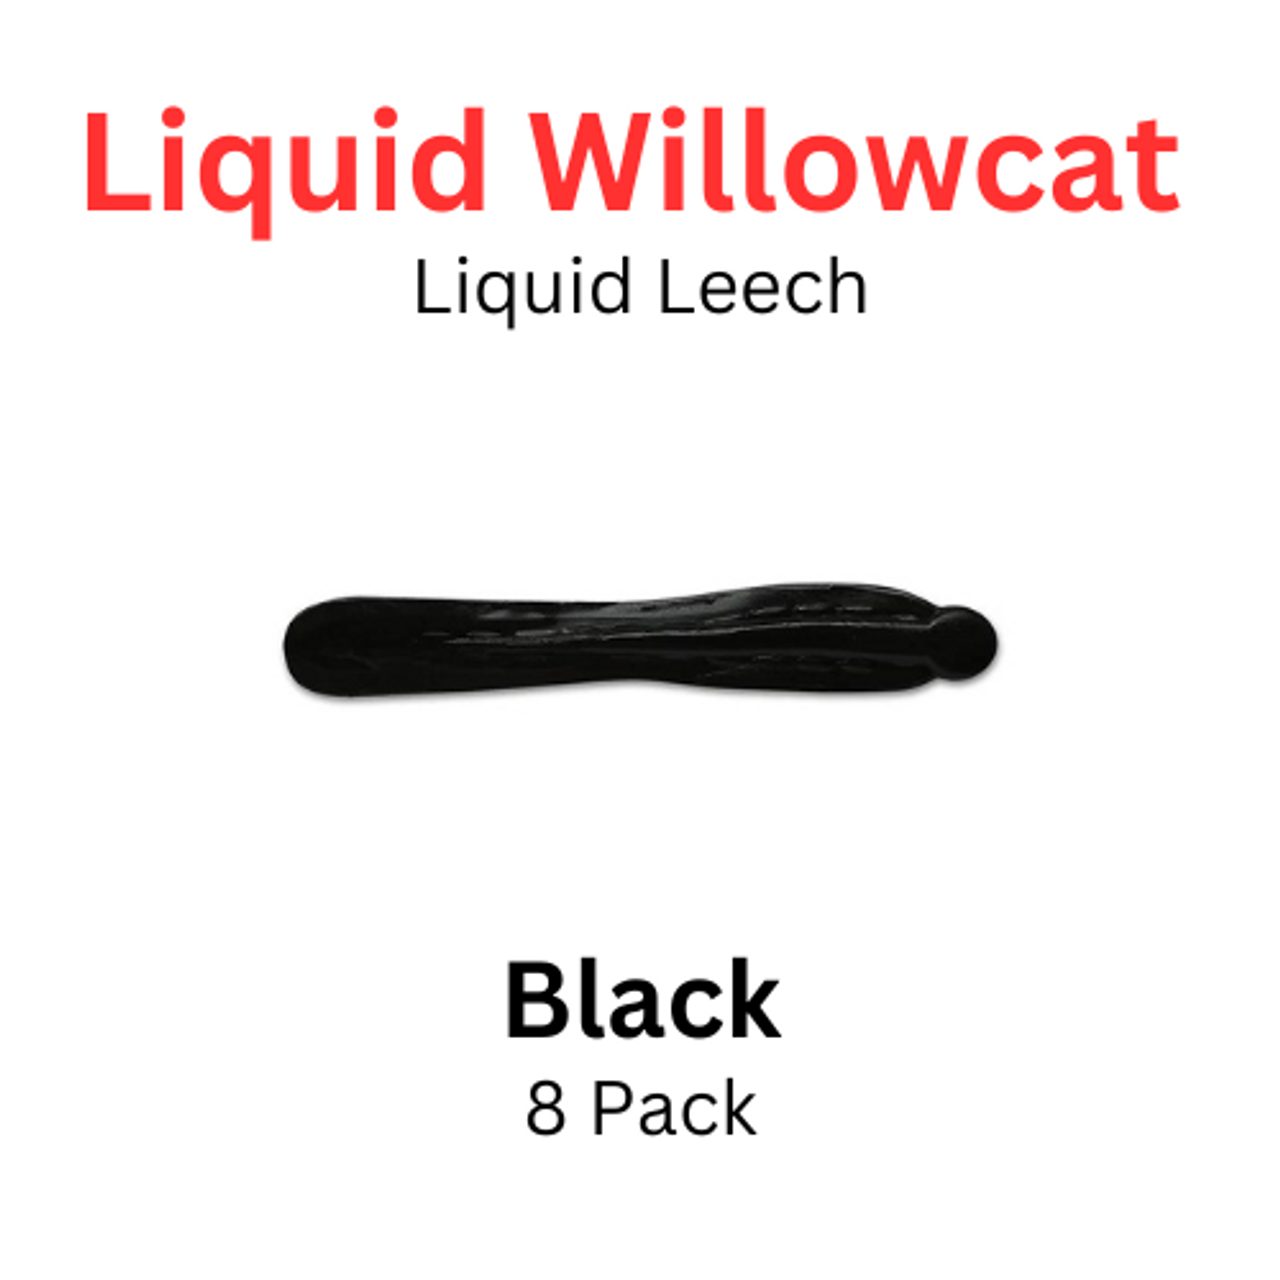 LIQUID WILLOWCAT - LIQUID LEECH 